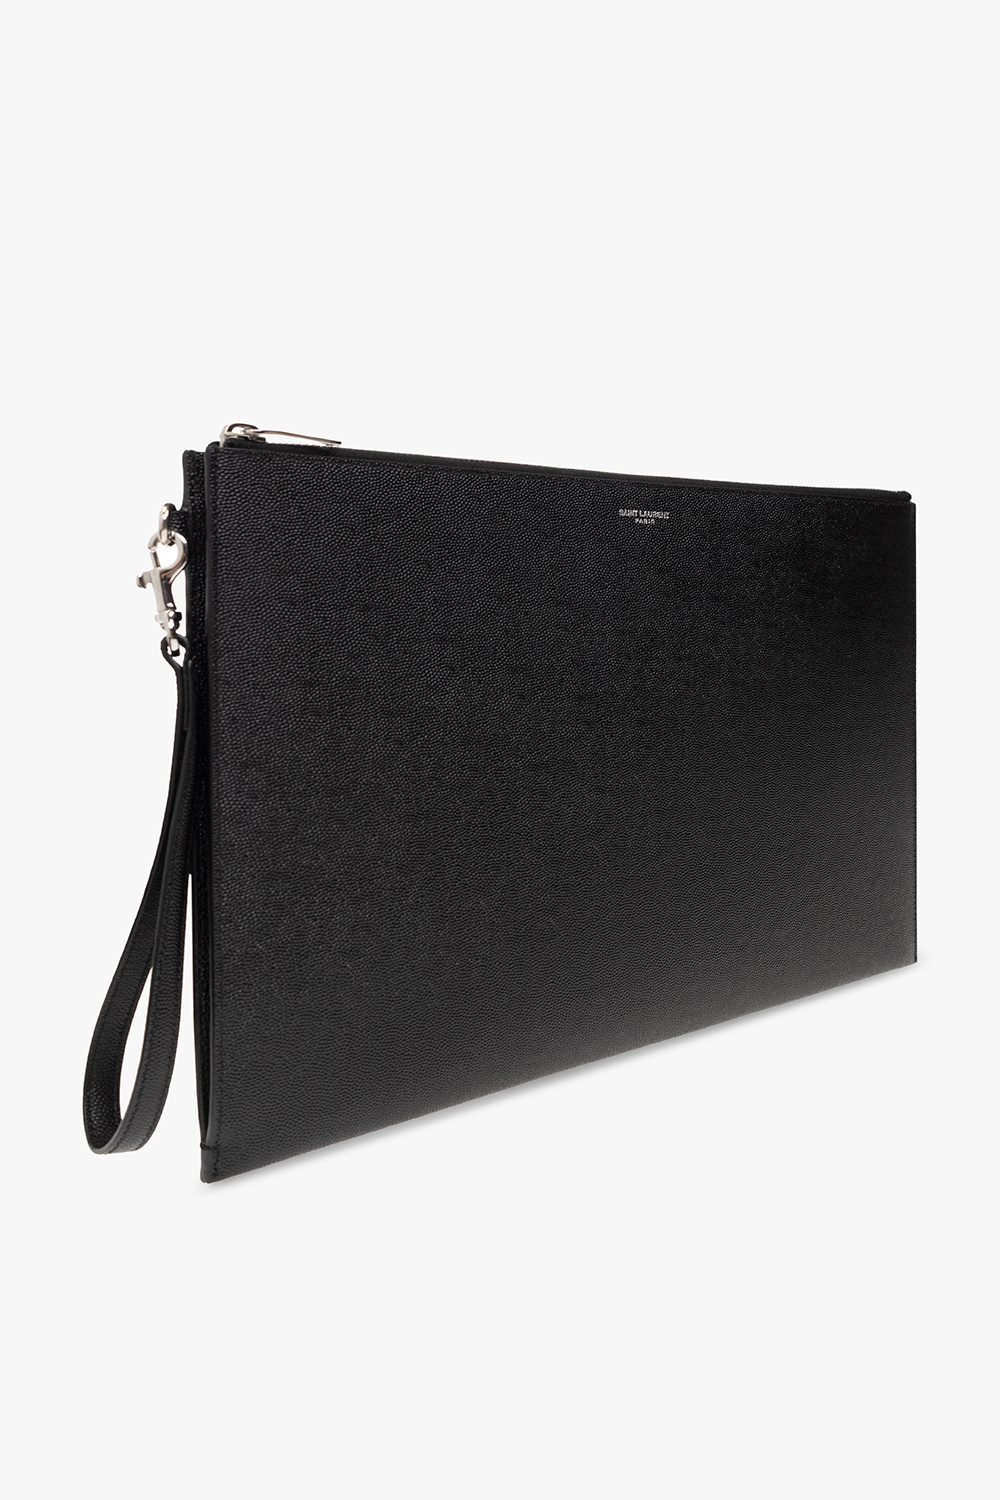 Saint Laurent Handbag with leather